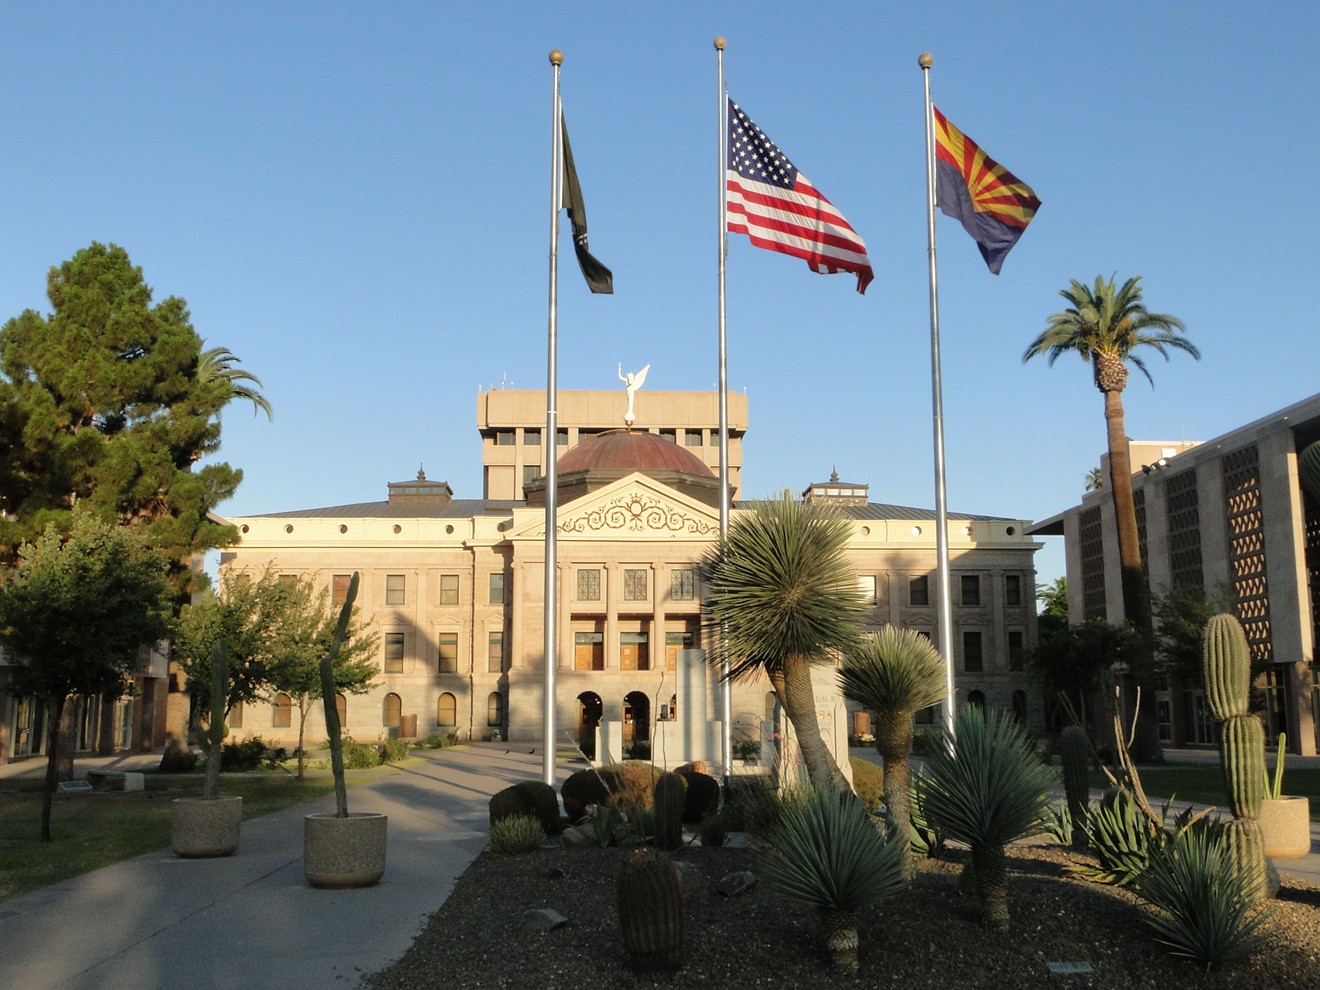 The Arizona State Capitol